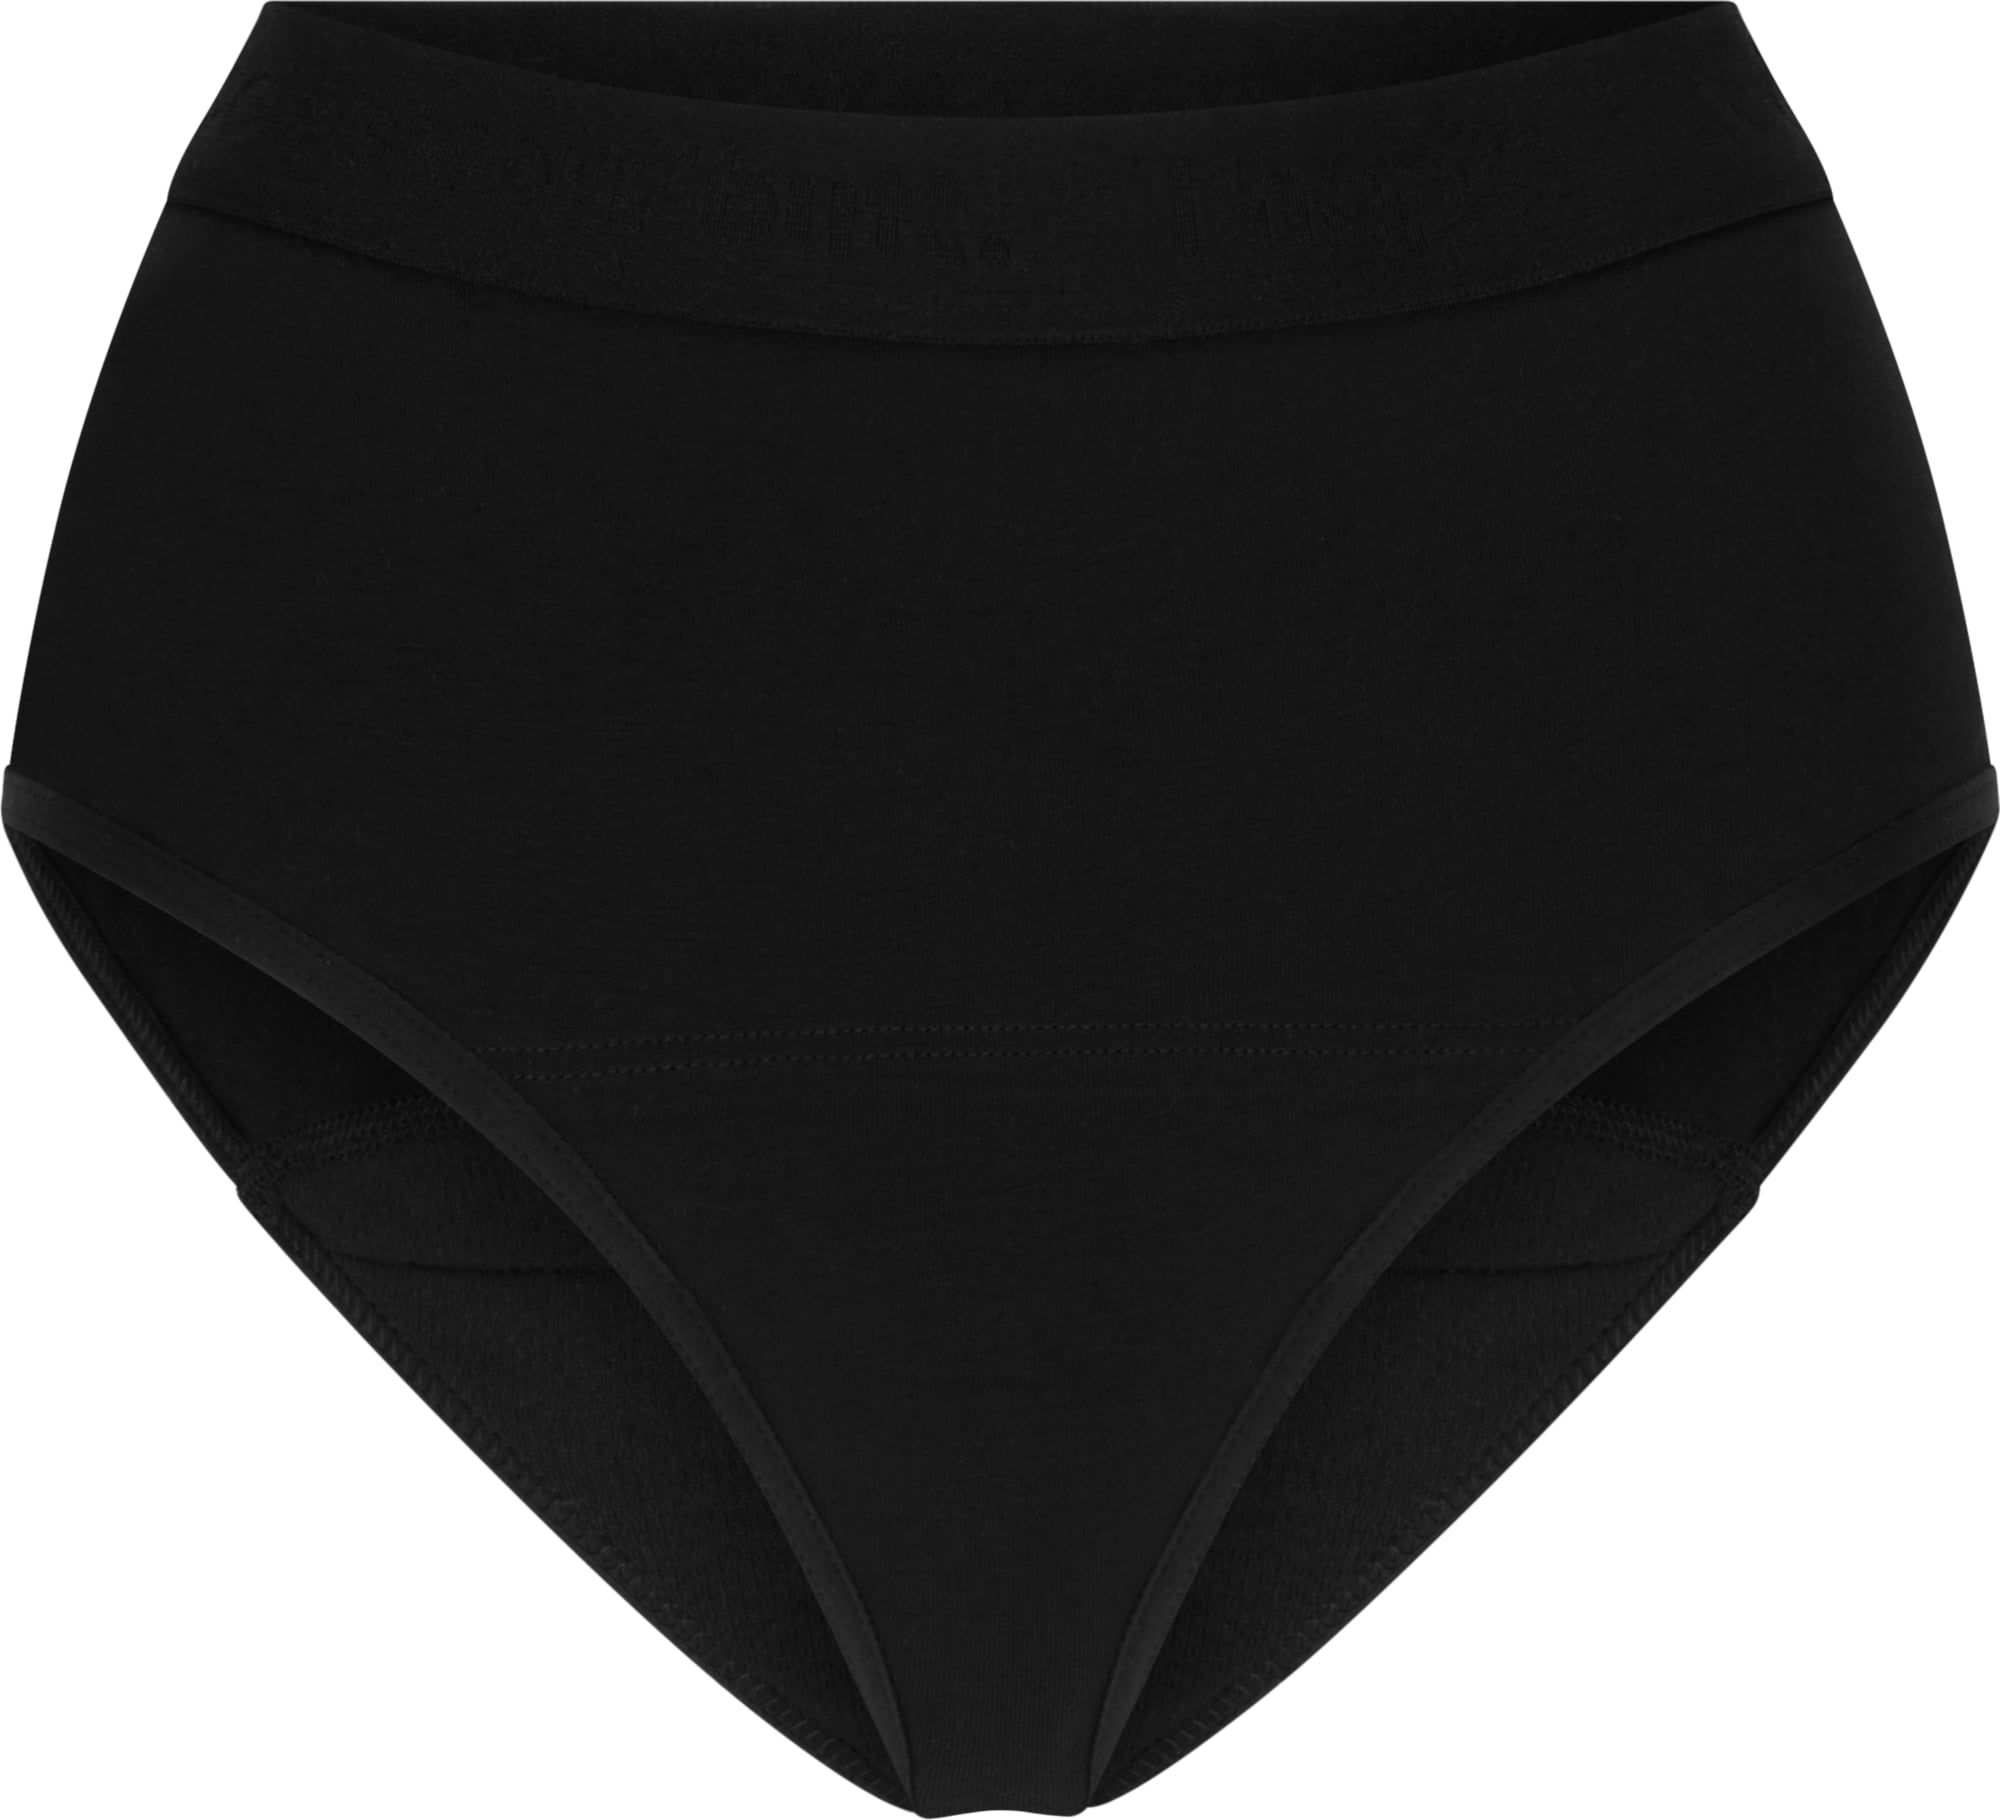 https://ec.nice-cdn.com/upload/image/product/large/default/the-female-company-period-underwear-hipster-basic-black-normal-56-2044133-en.jpg